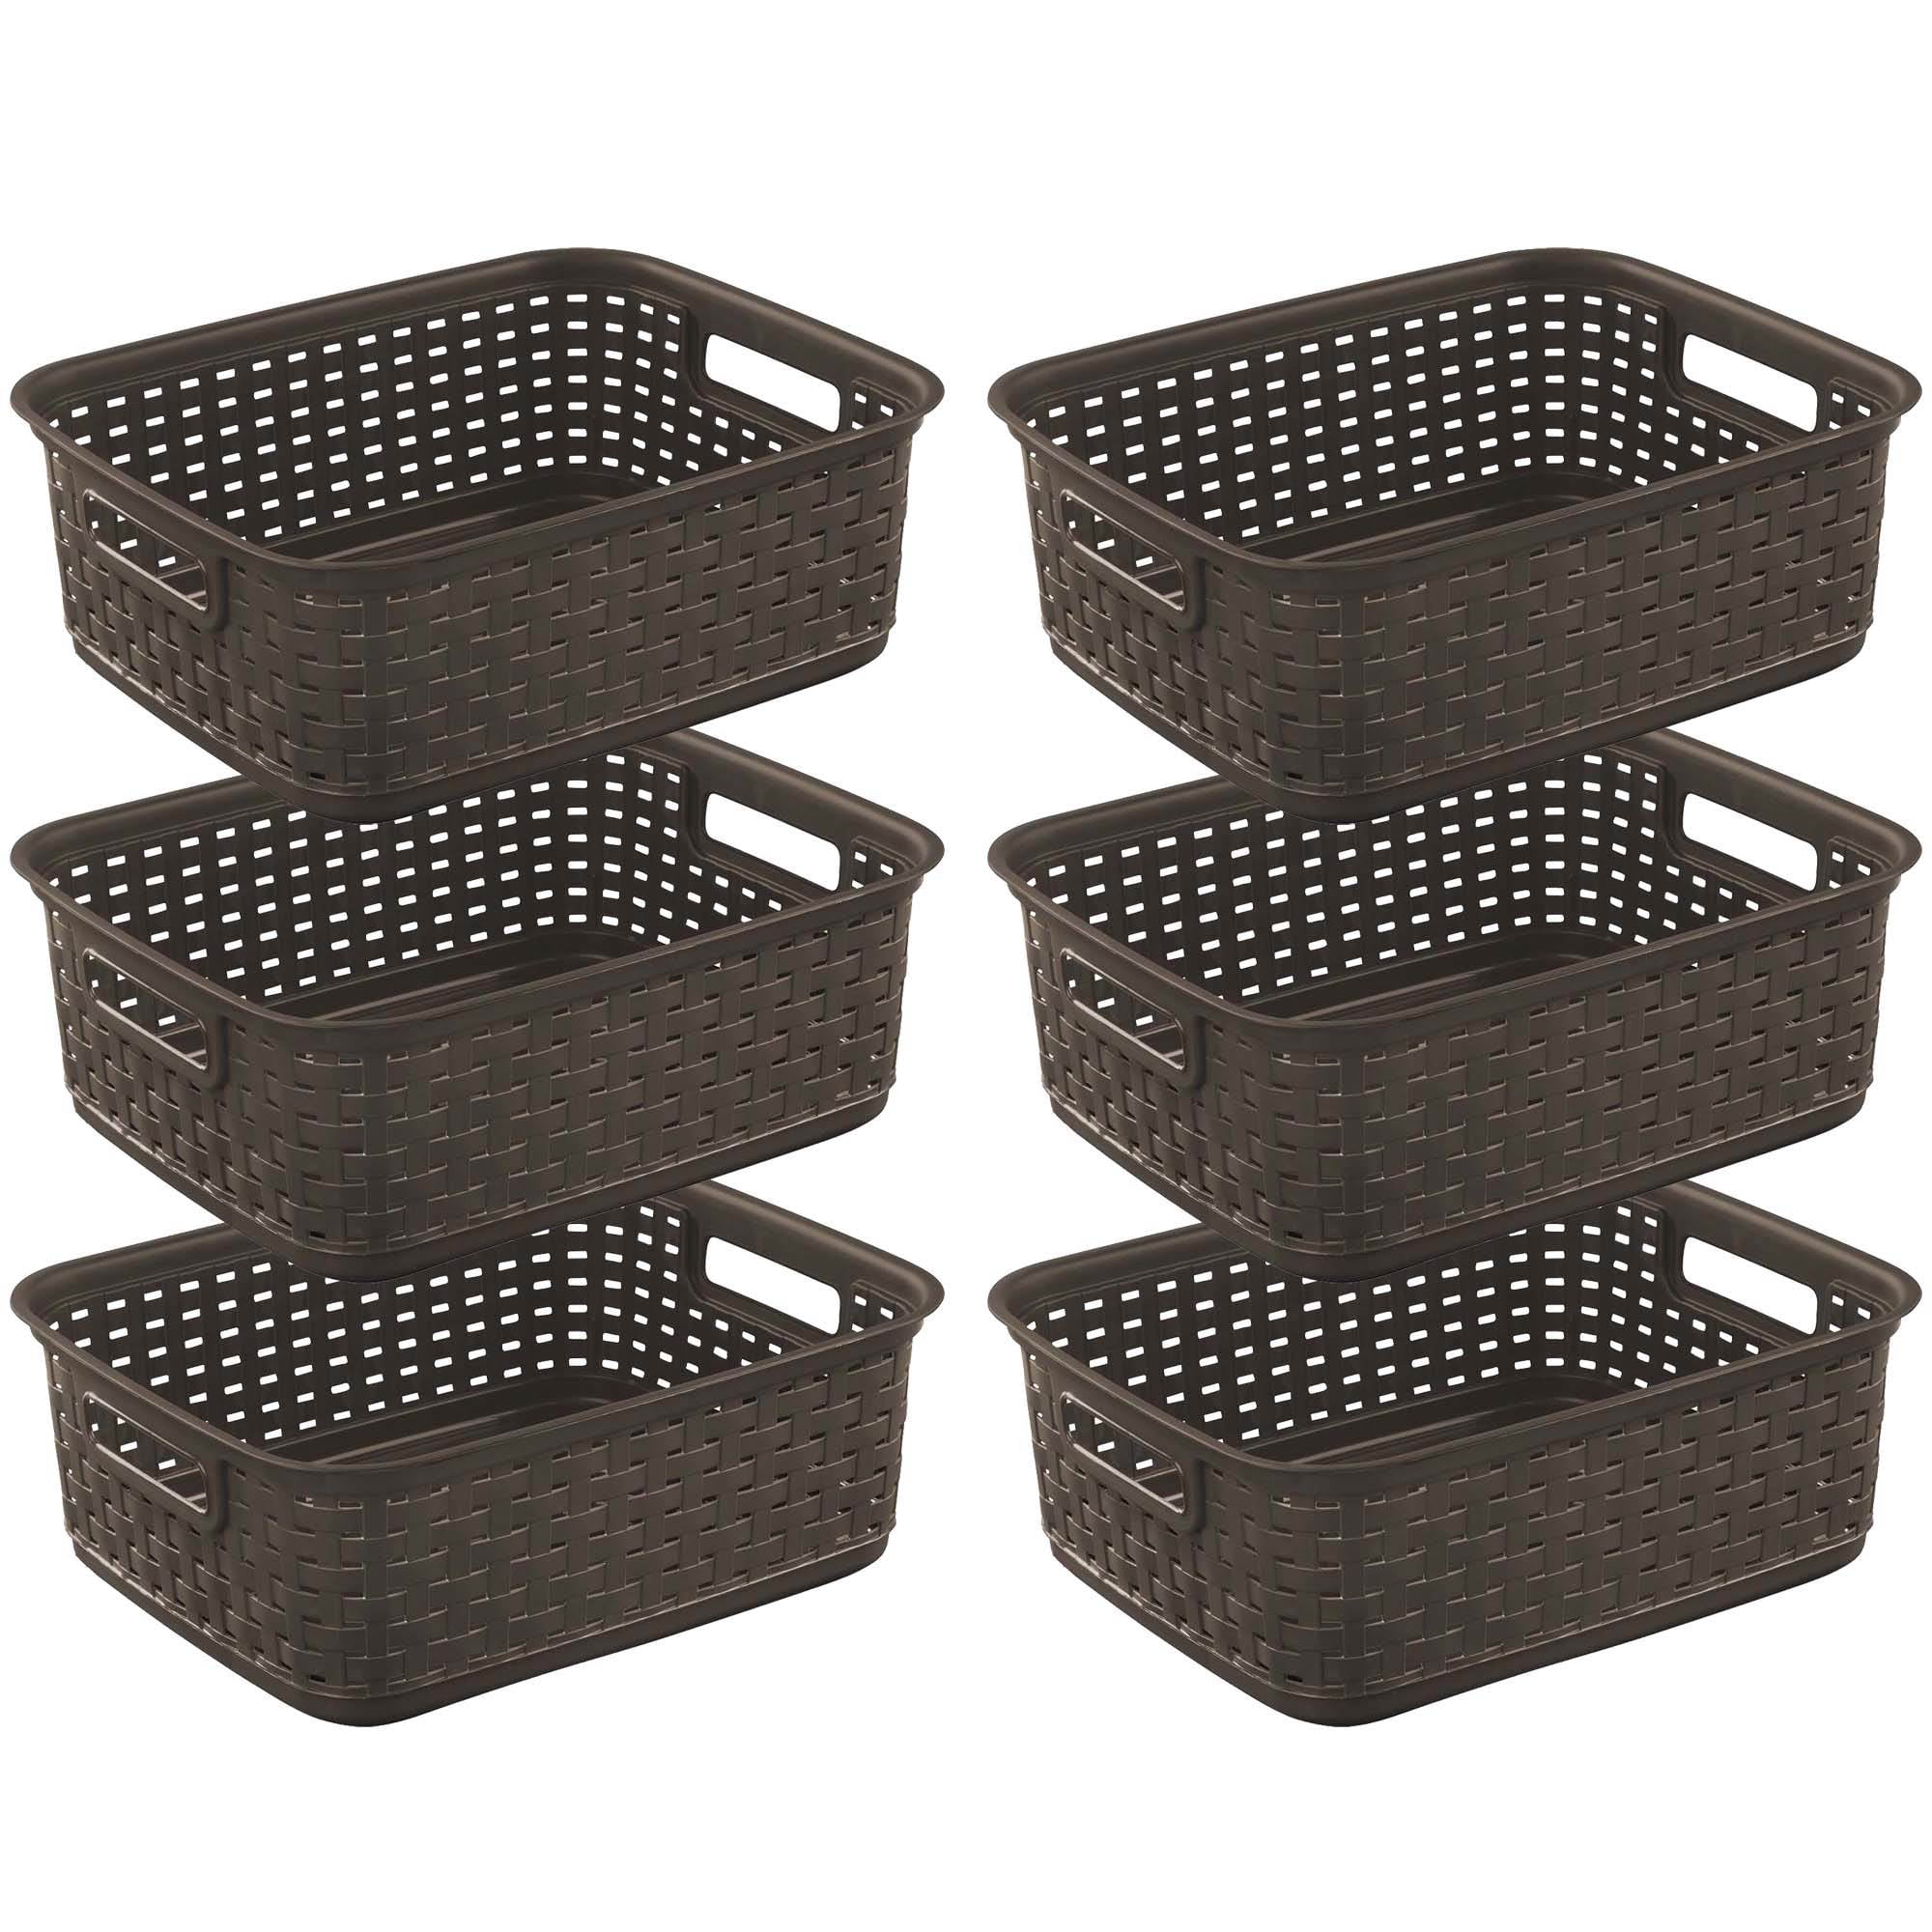 Sterilite Decorative Wicker Style Short Weave Storage Basket, Espresso (24 Pack) - 2